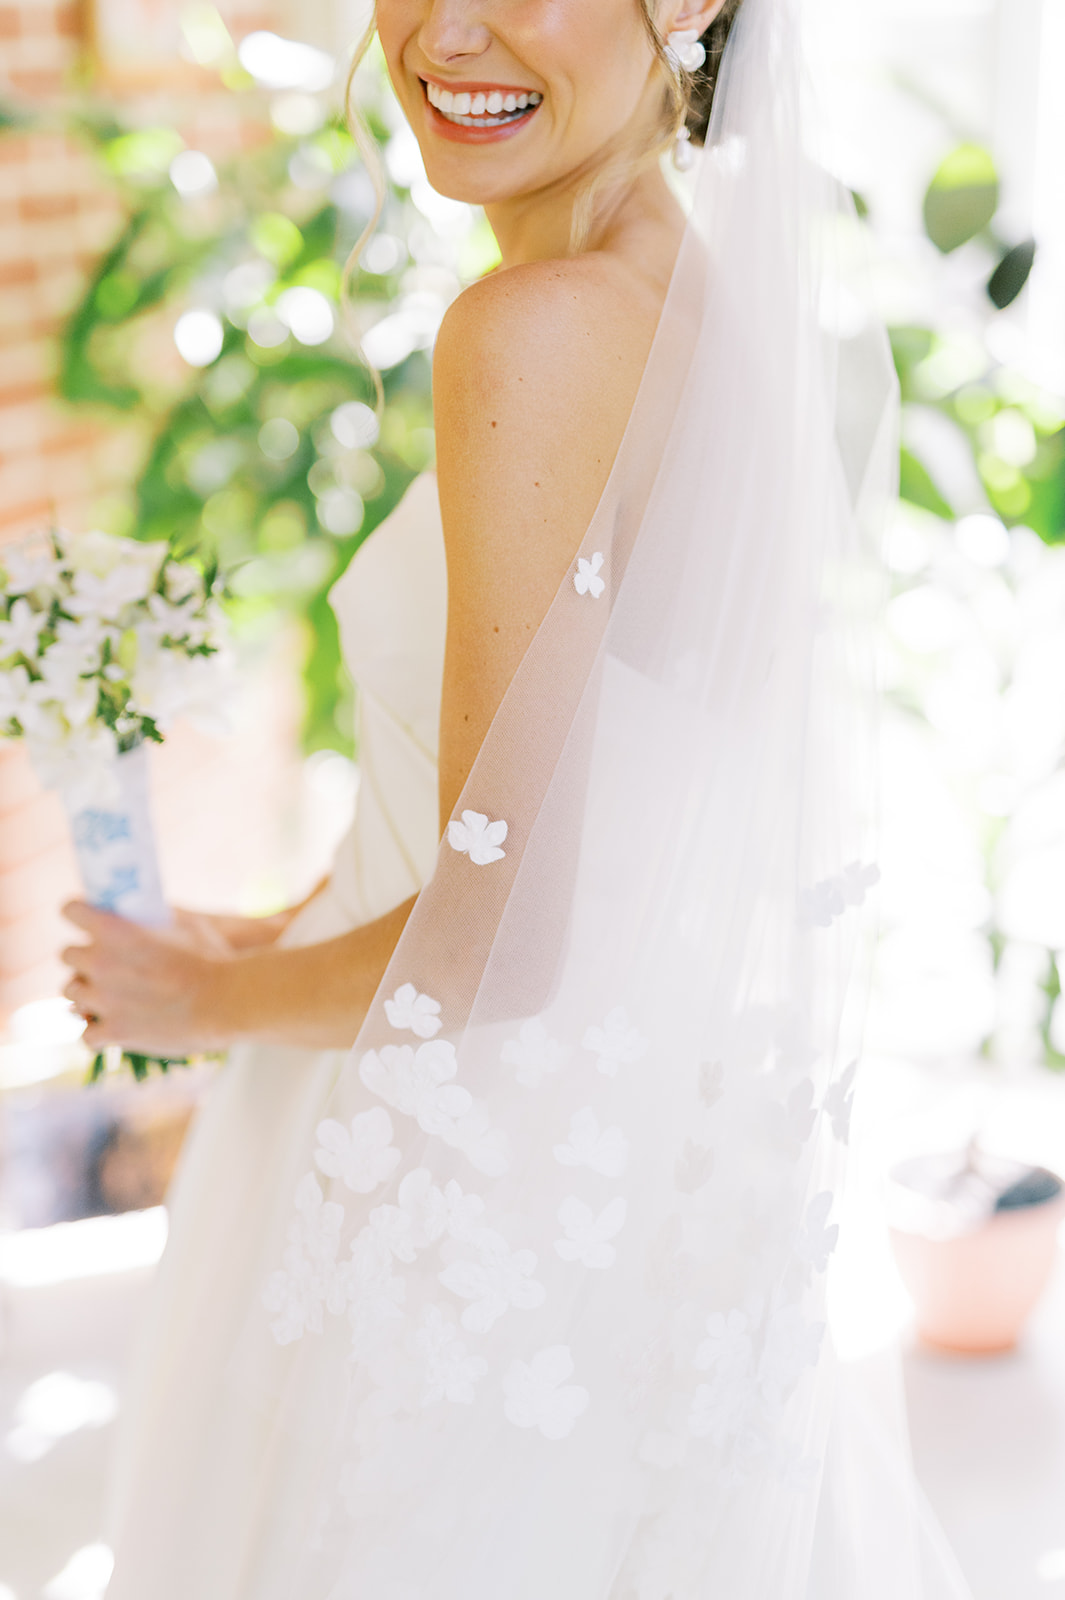 details of floral appliques on bridal veil